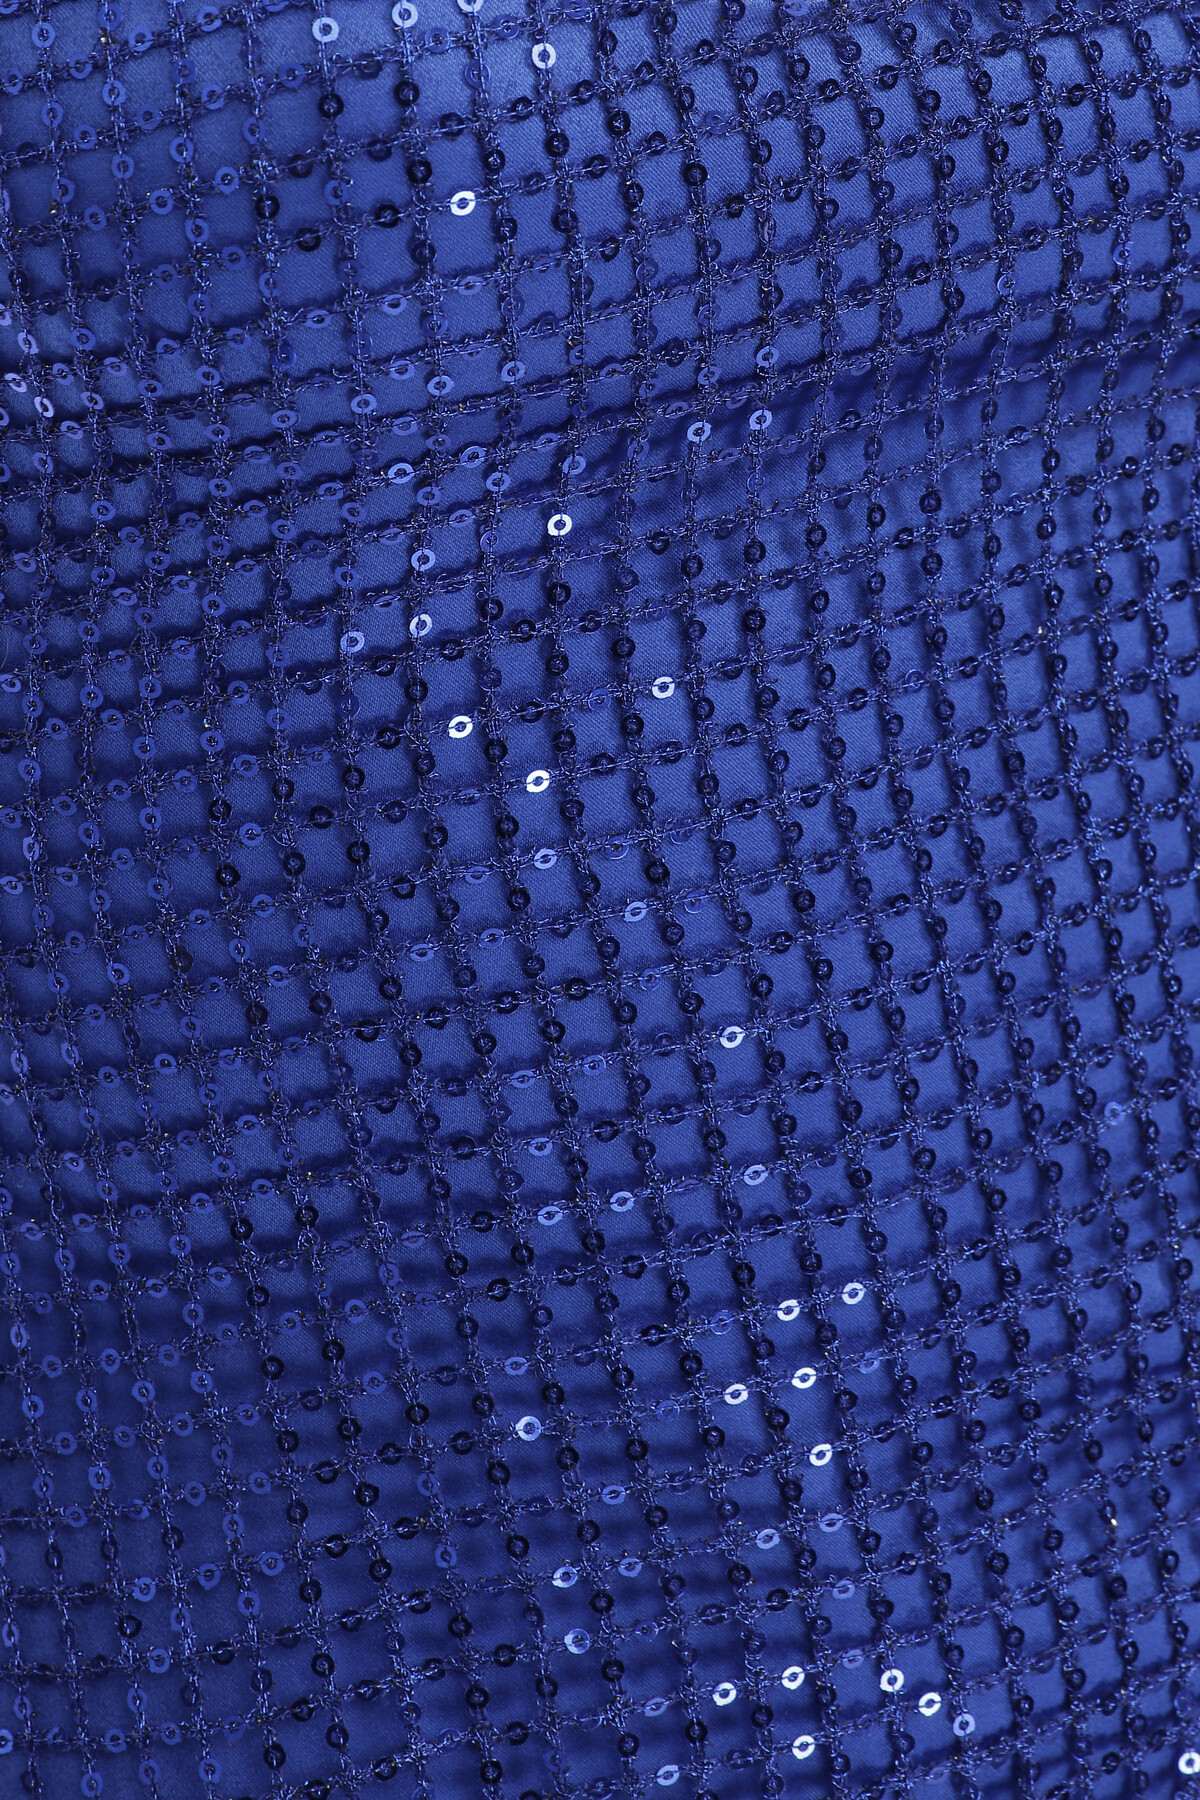 IZABEL Midnight Sequin Detailed Netted Dress